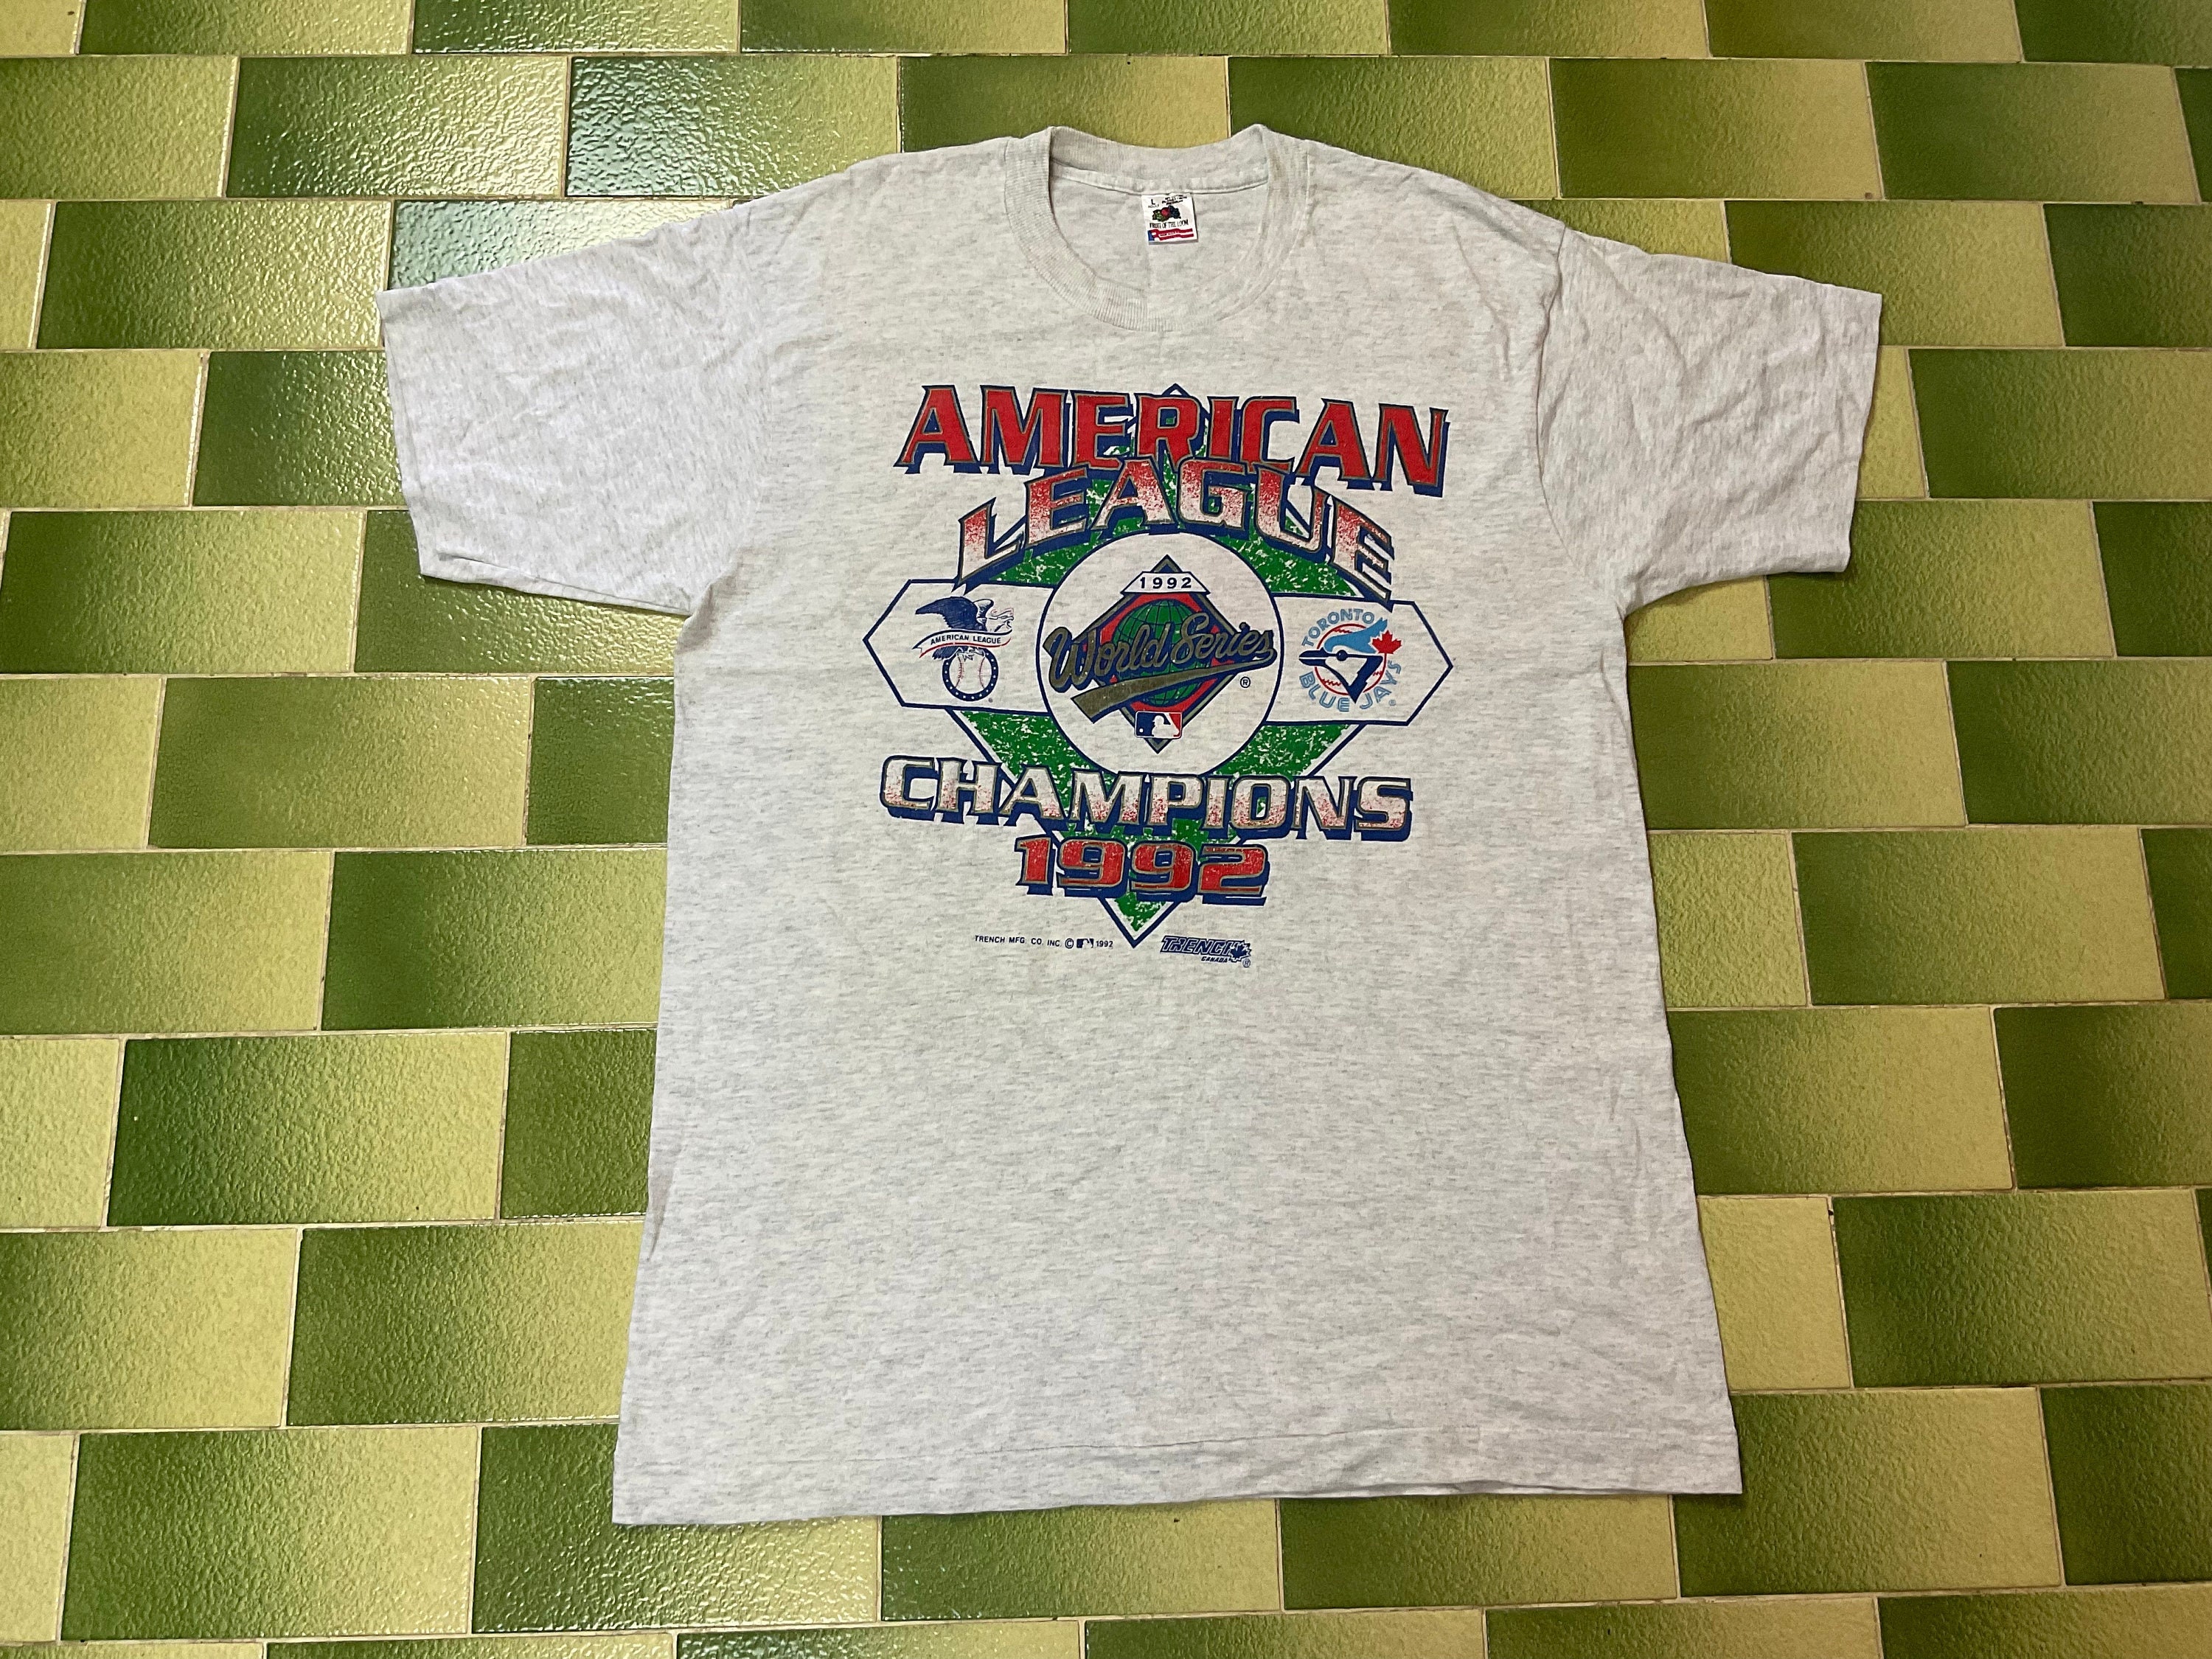 Vintage MLB Canada World Series Sweatshirt 1992 Size Large NOS